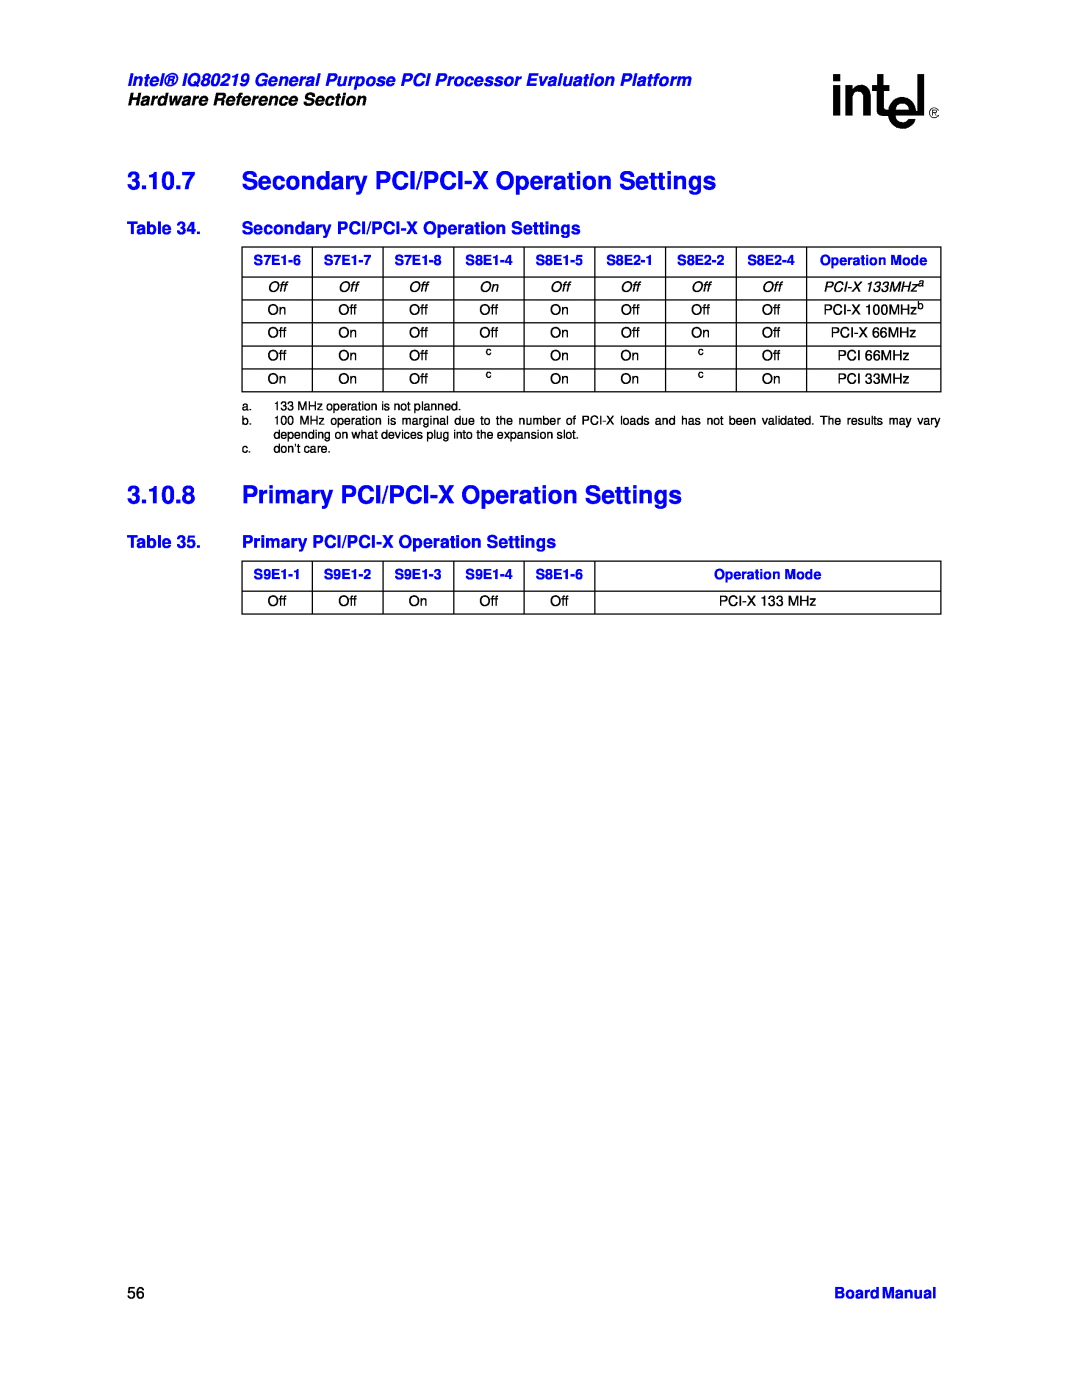 Intel IQ80219 Secondary PCI/PCI-X Operation Settings, Primary PCI/PCI-X Operation Settings, Hardware Reference Section 